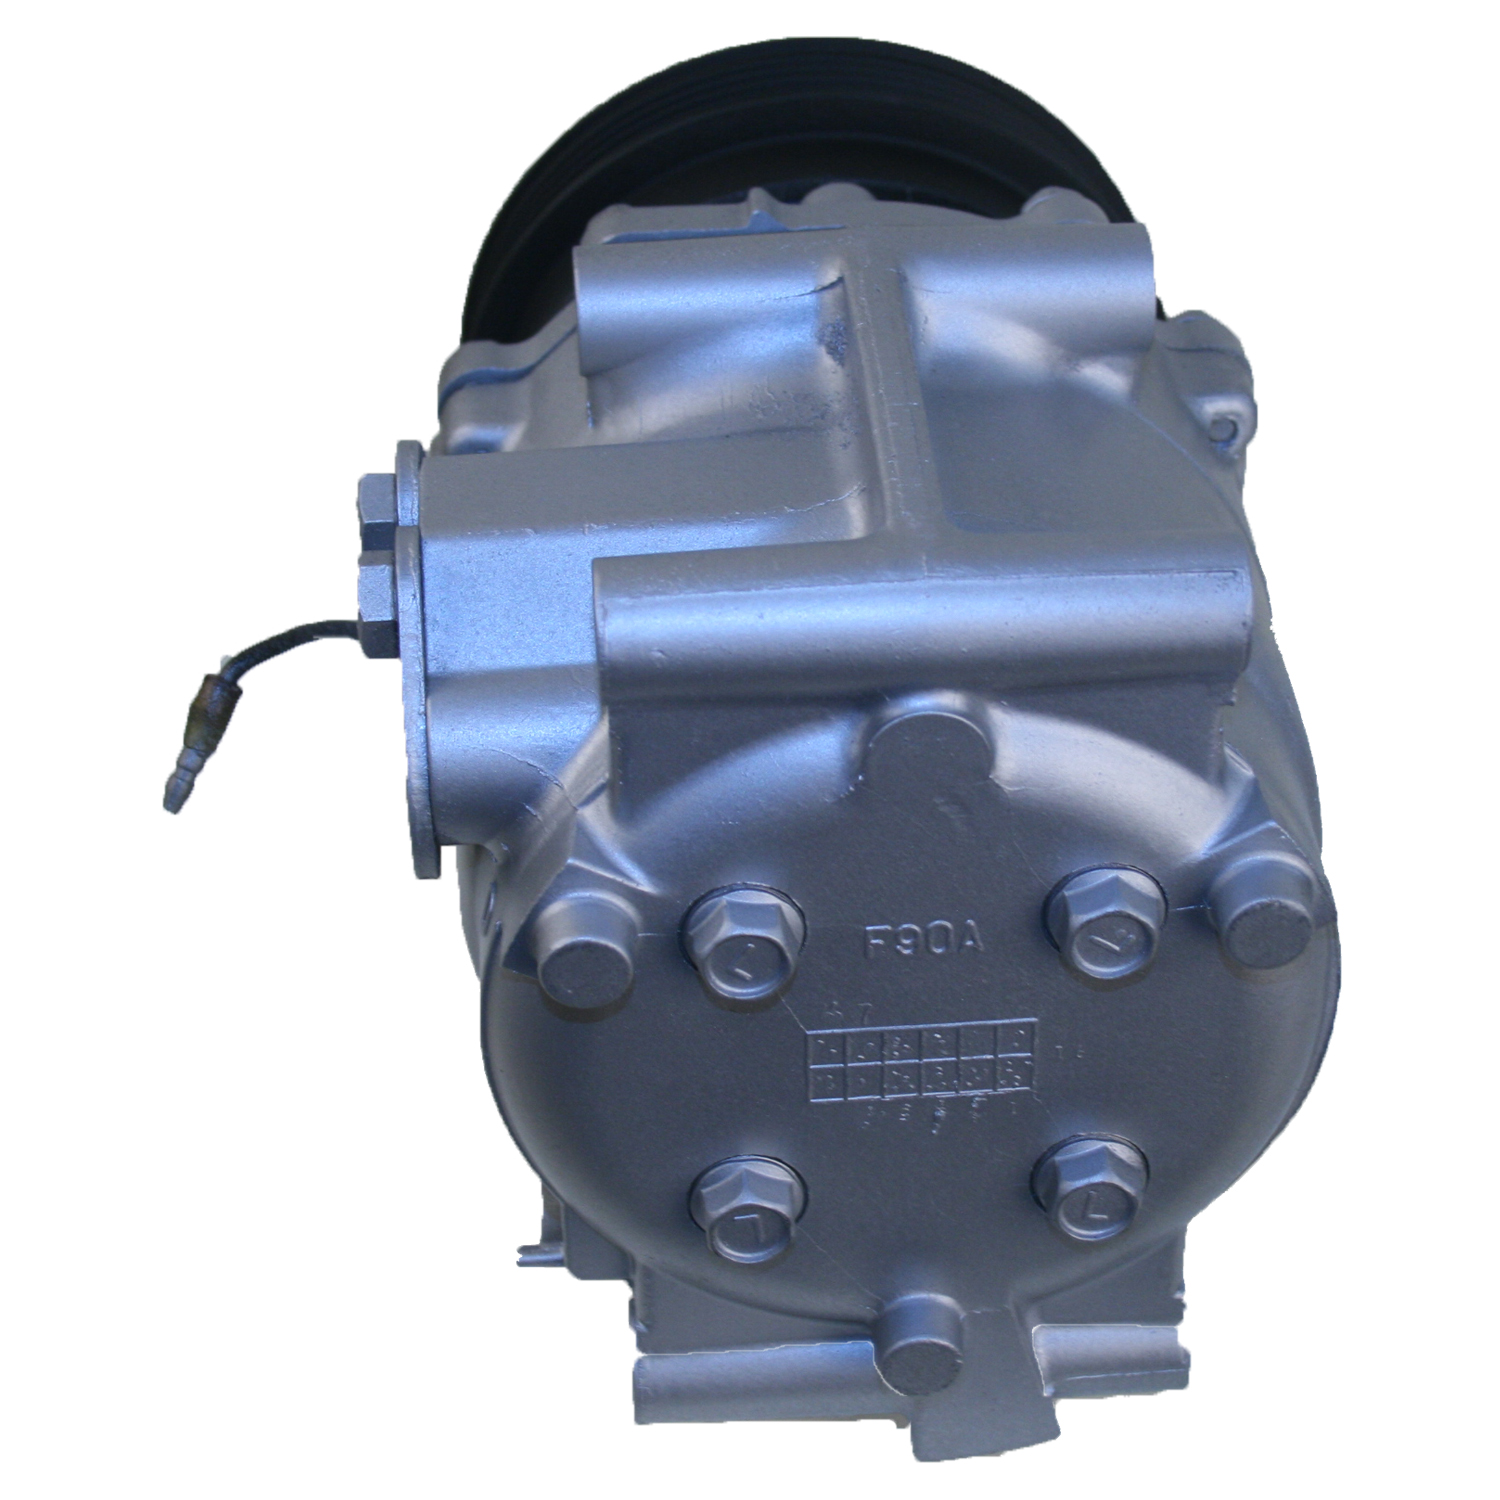 TCW Compressor 40840.401 Remanufactured Product Image field_60b6a13a6e67c